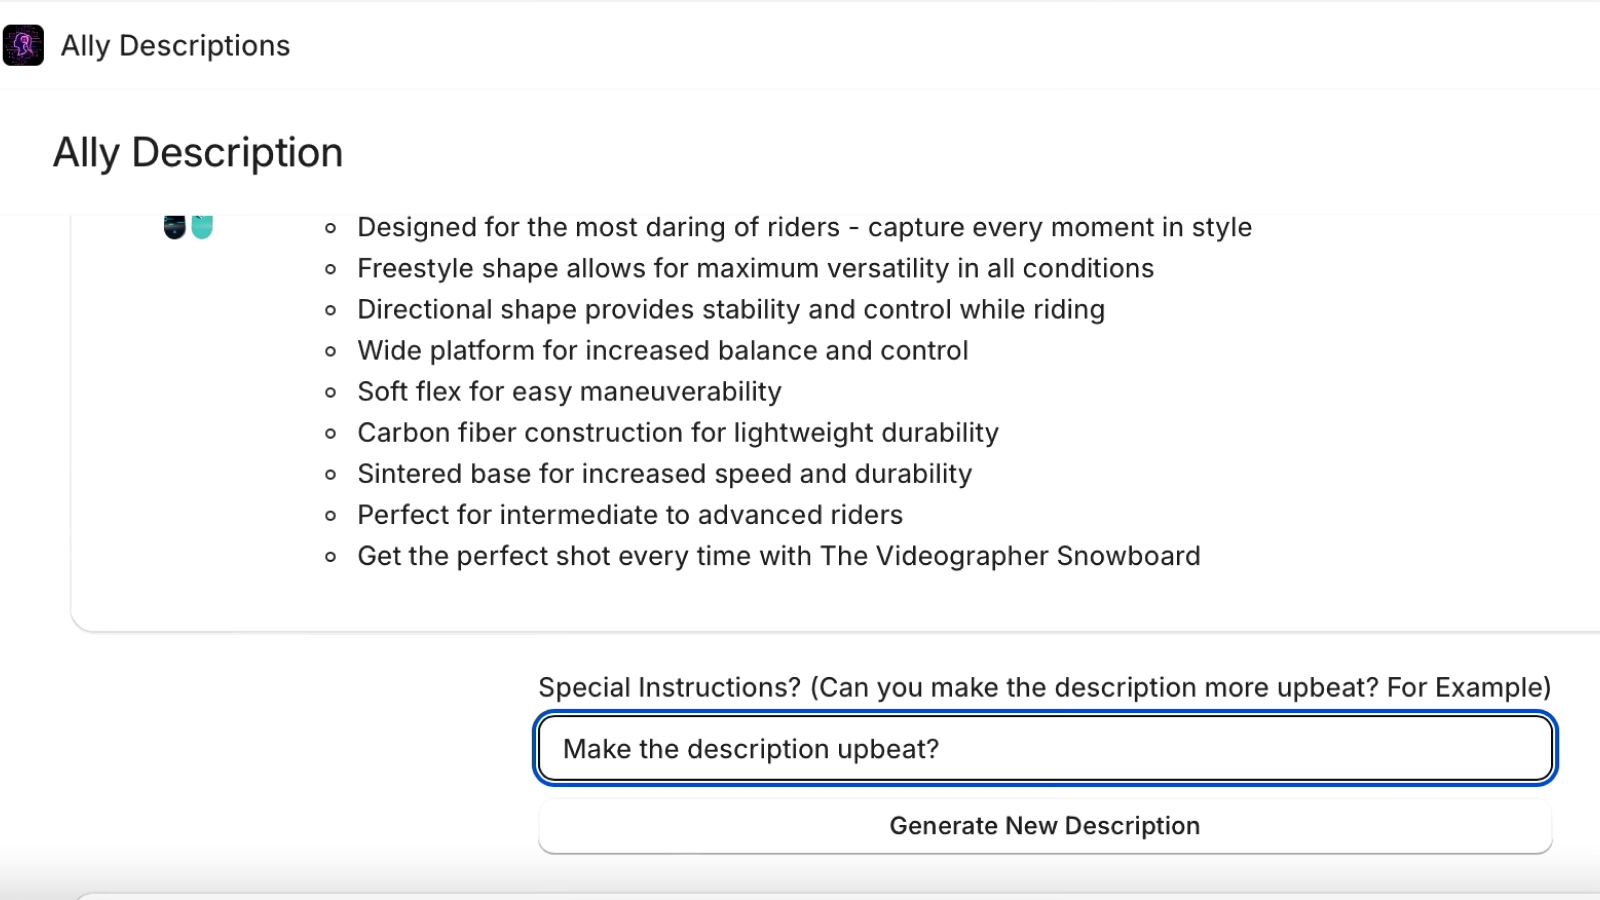 Adding custom request to product description